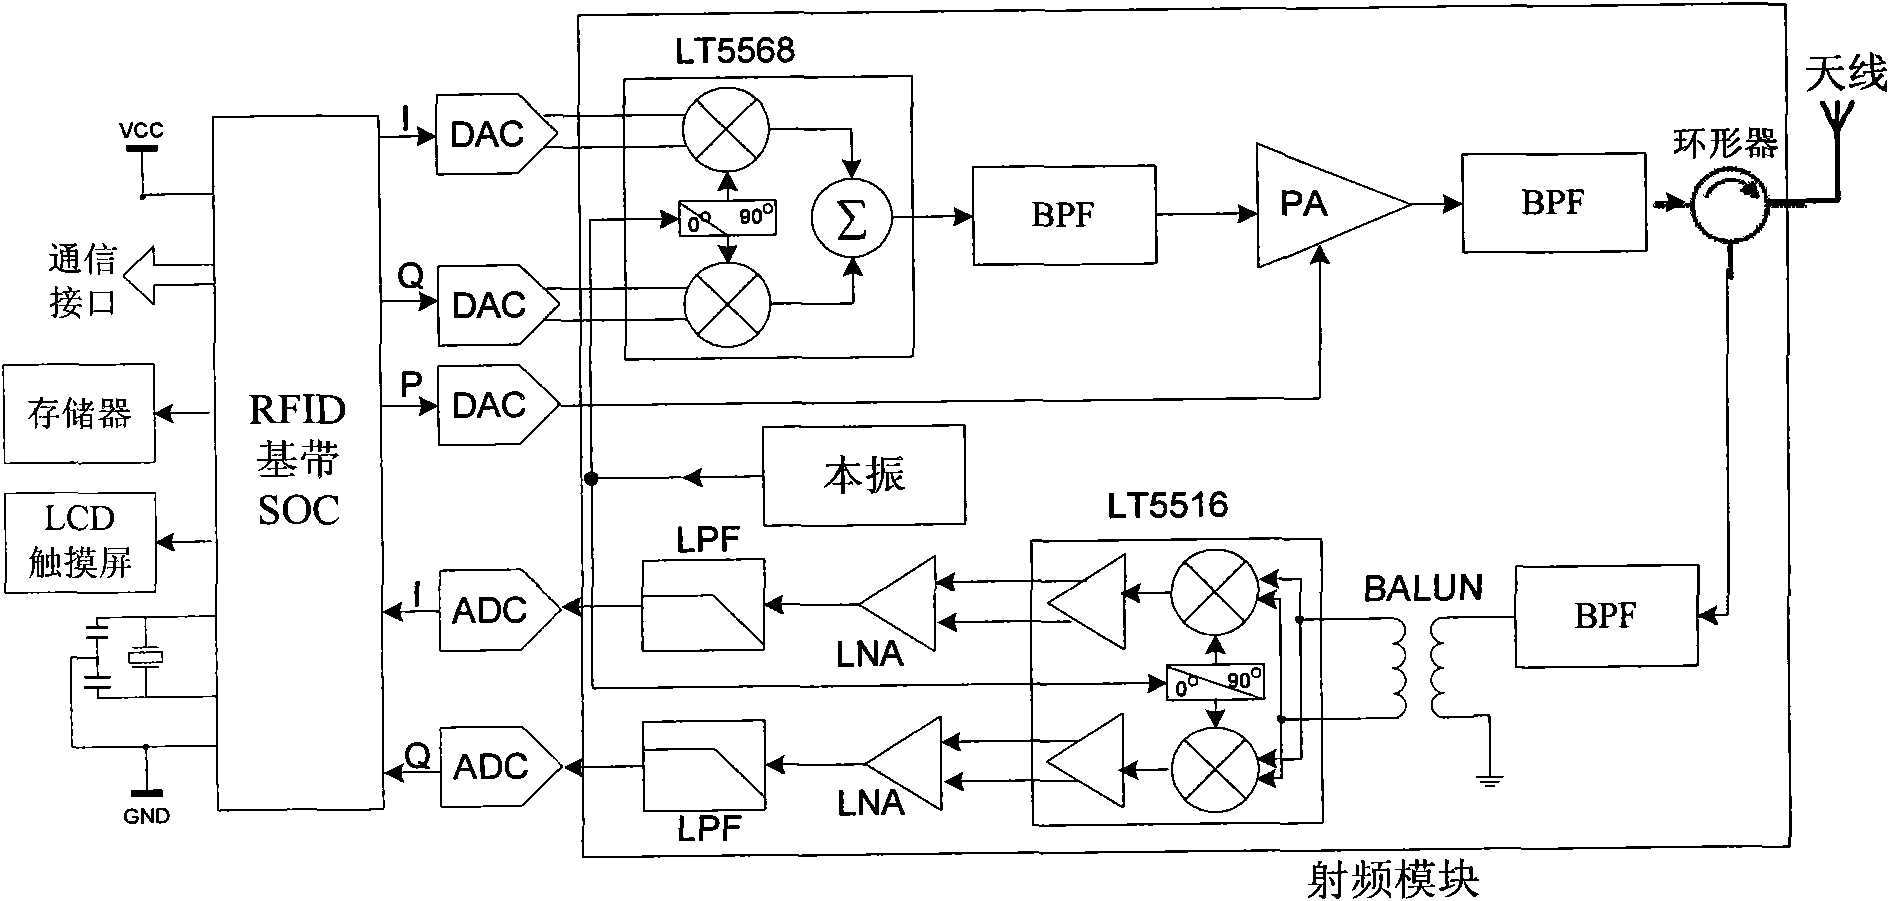 Baseband signal processing SOC chip of multi-protocol UHF RFID reader